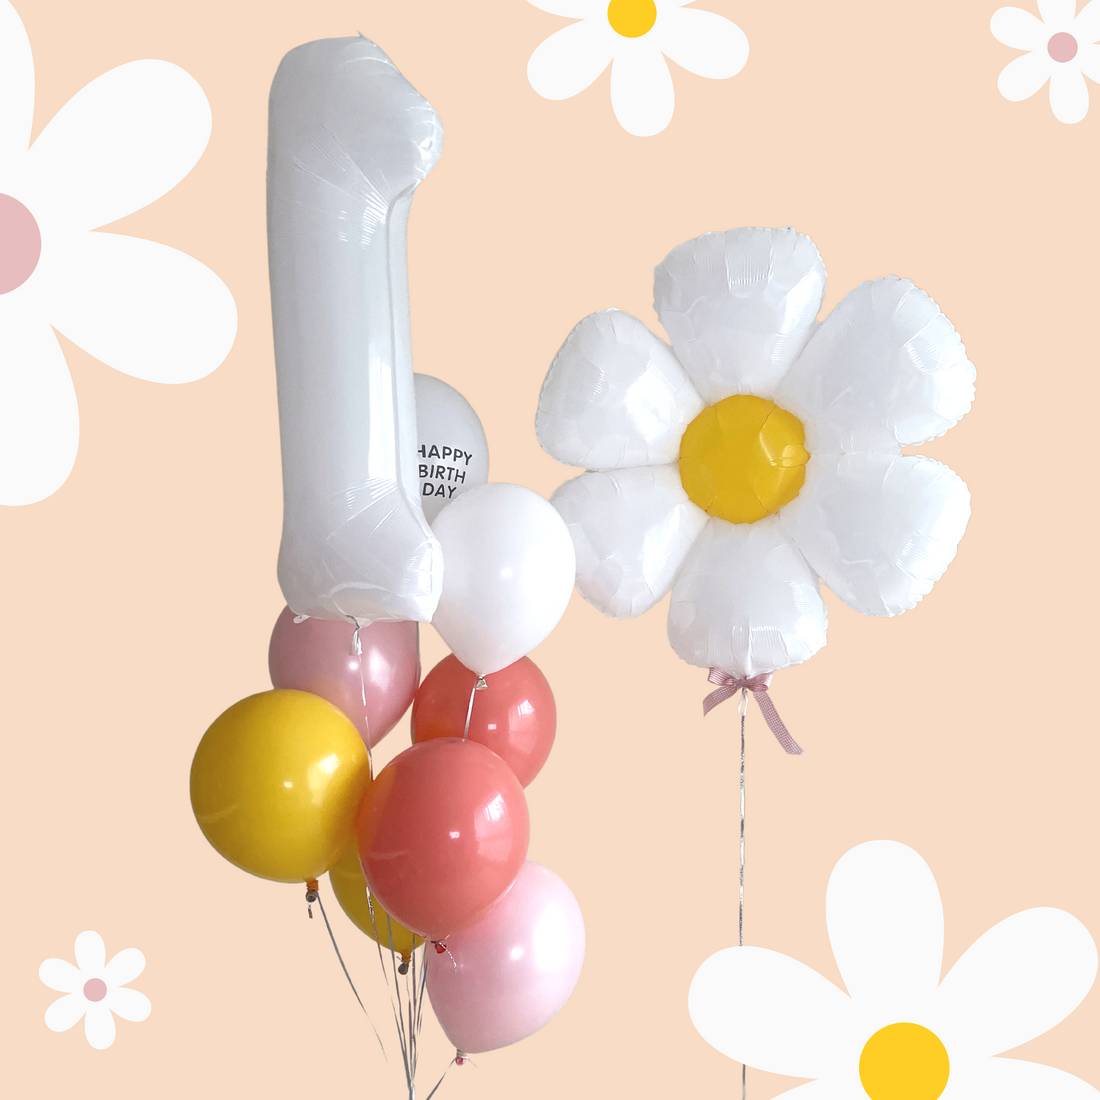 Daisy, Rose, Stalk Flower Balloon Bouquet